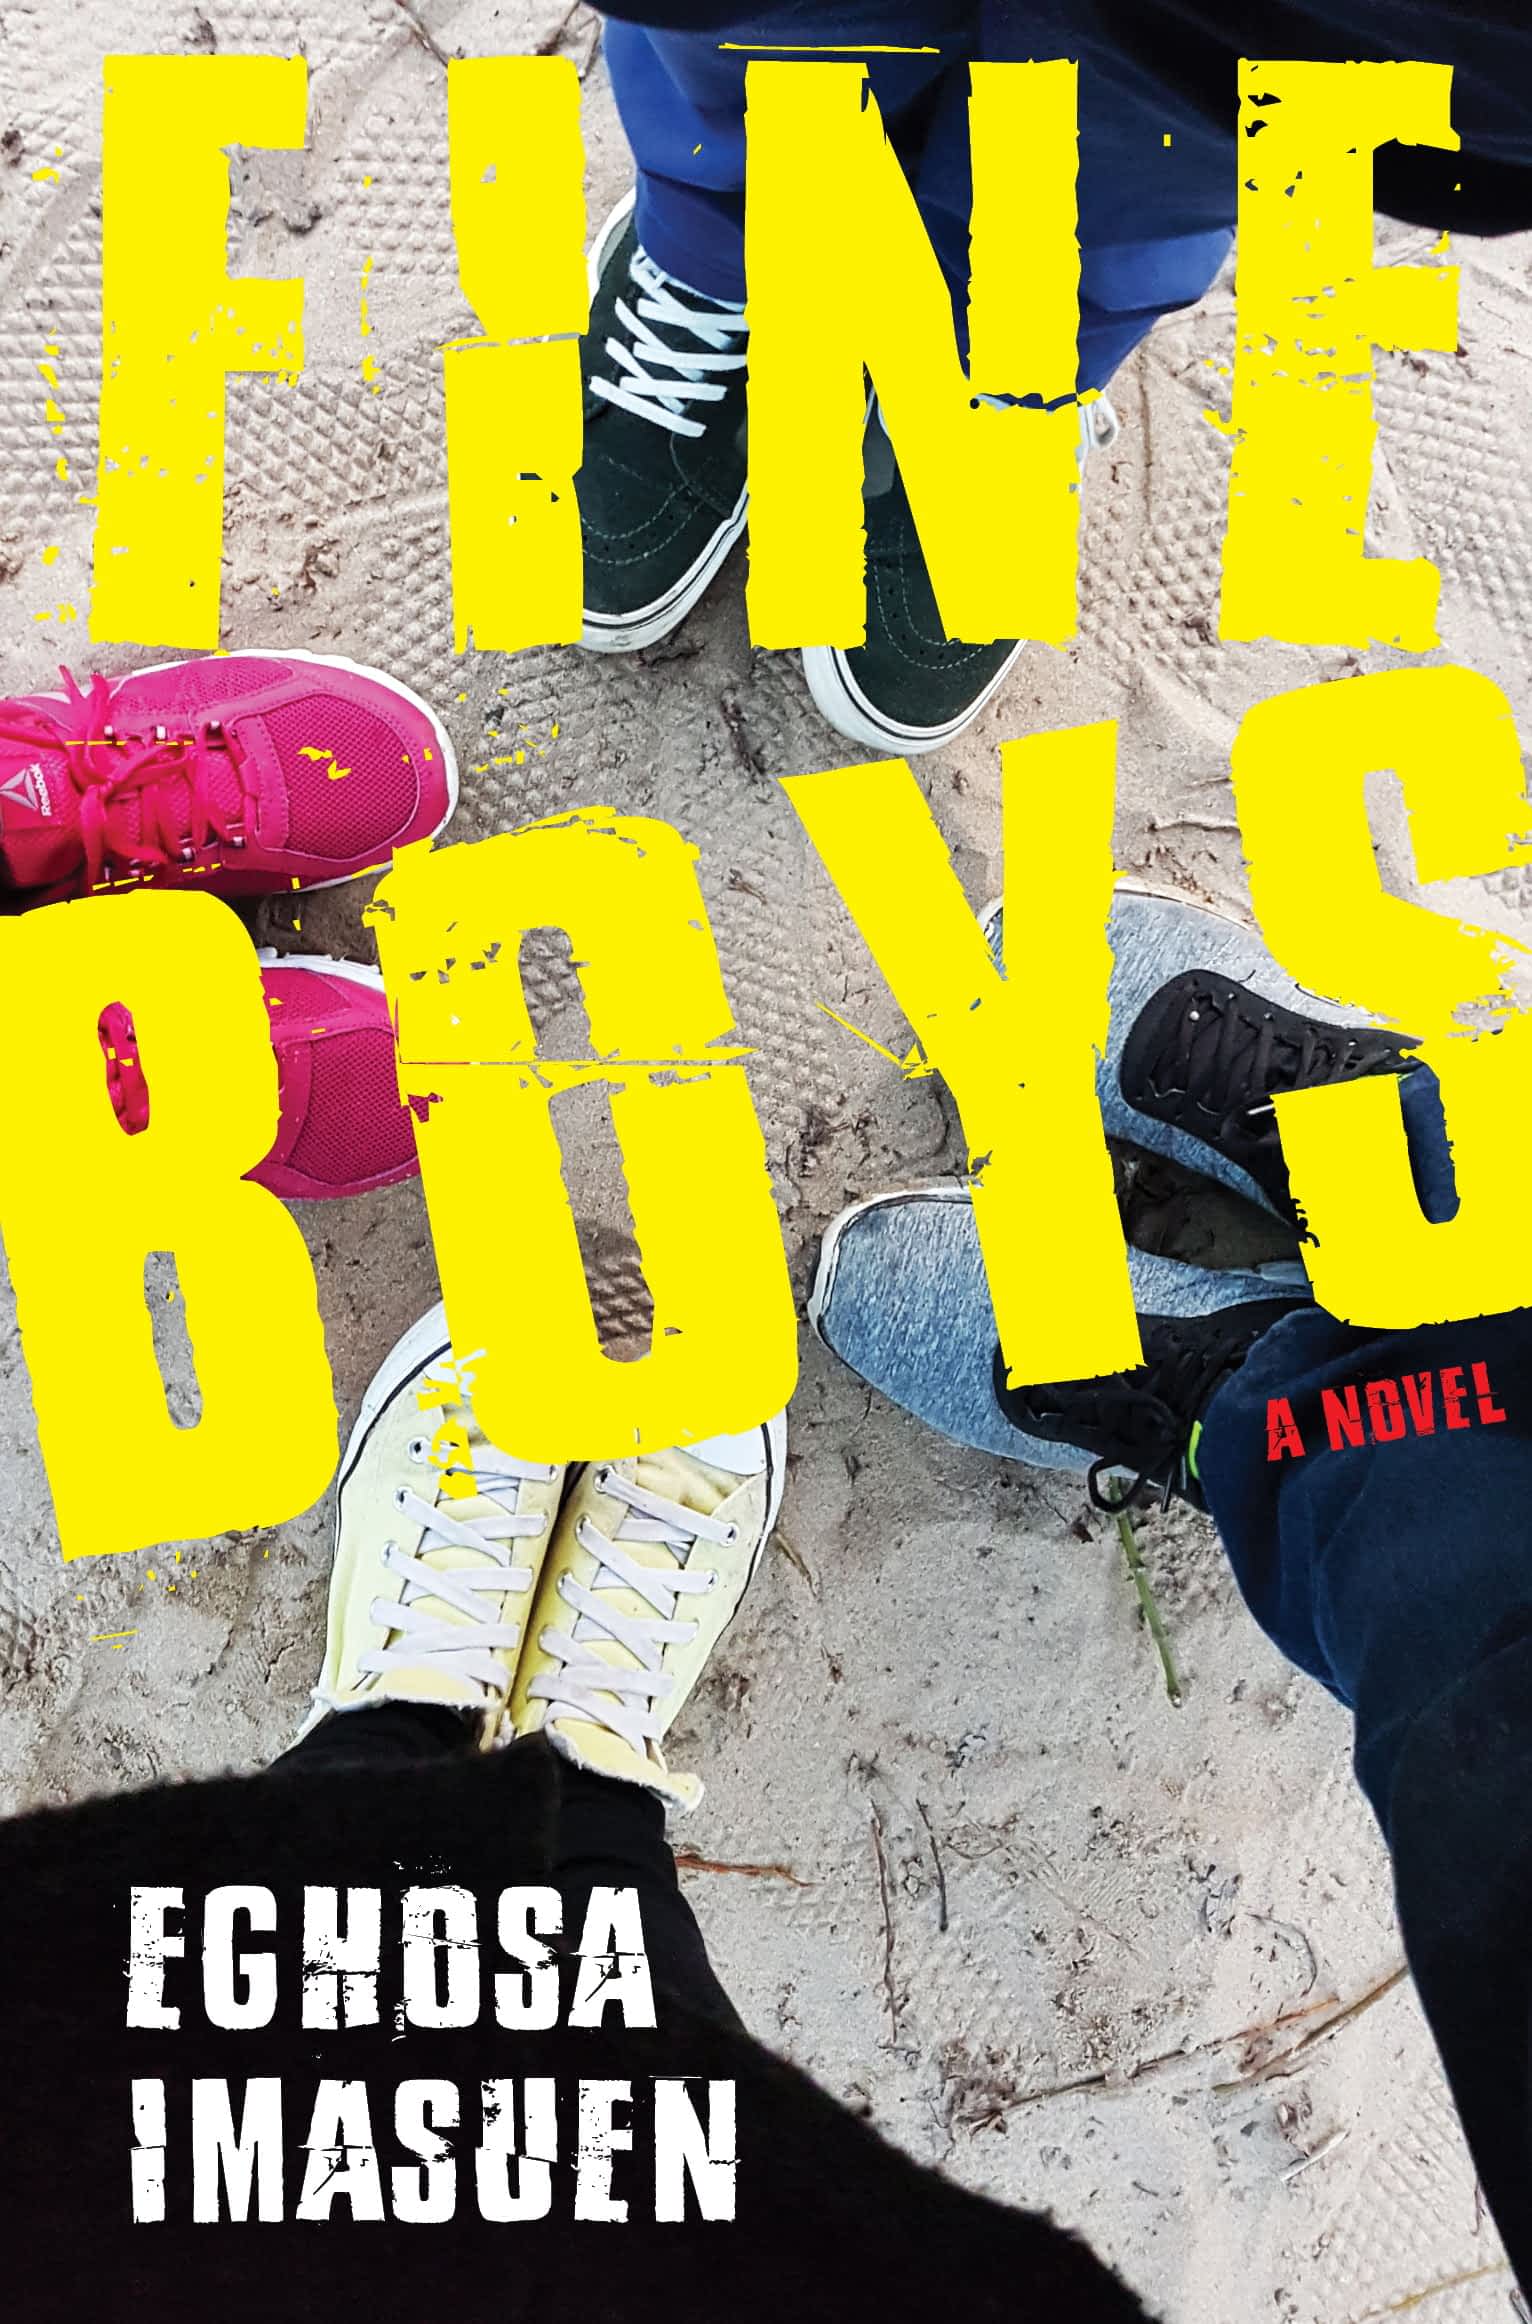 fine boys revised Fine Boys (Revised Edition)